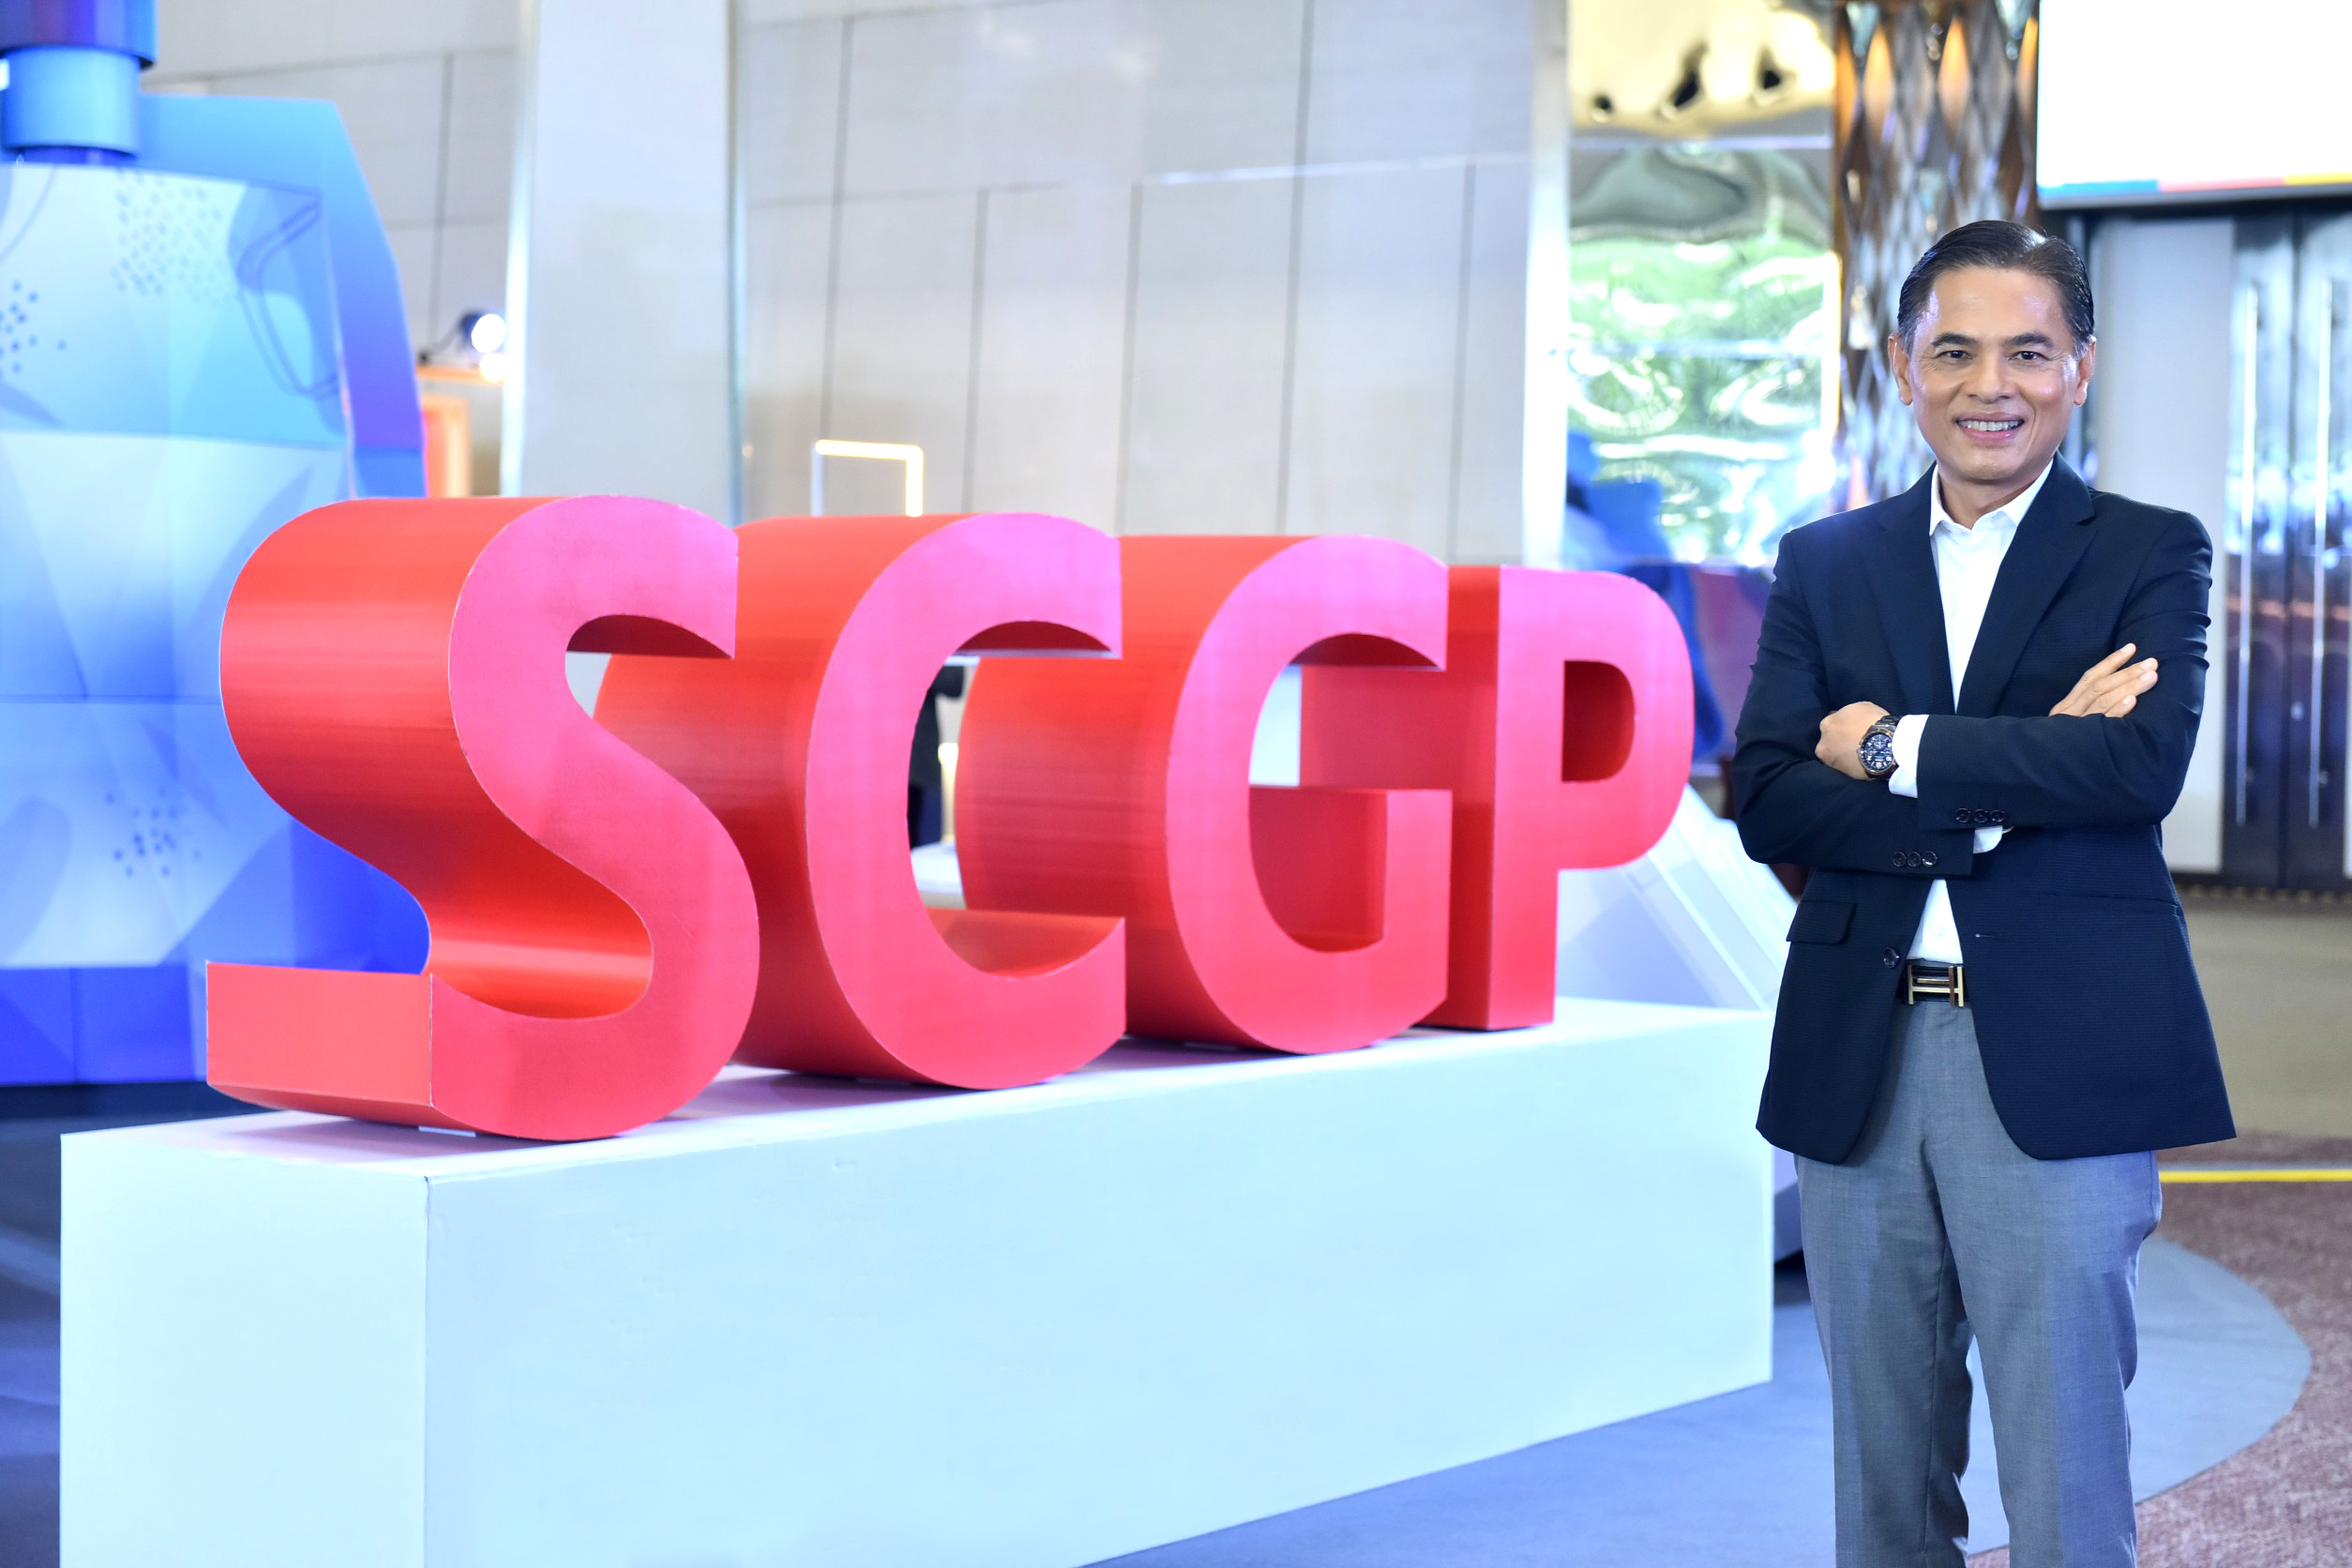 SCGP พร้อมเข้าเทรดในตลาดหลักทรัพย์ฯ 22 ต.ค.นี้ ลุ้นเข้าคำนวณดัชนี SET 50 วางกลยุทธ์การเติบโตในภูมิภาคอาเซียนด้วยโมเดลธุรกิจ Packaging Solutions ที่แตกต่าง